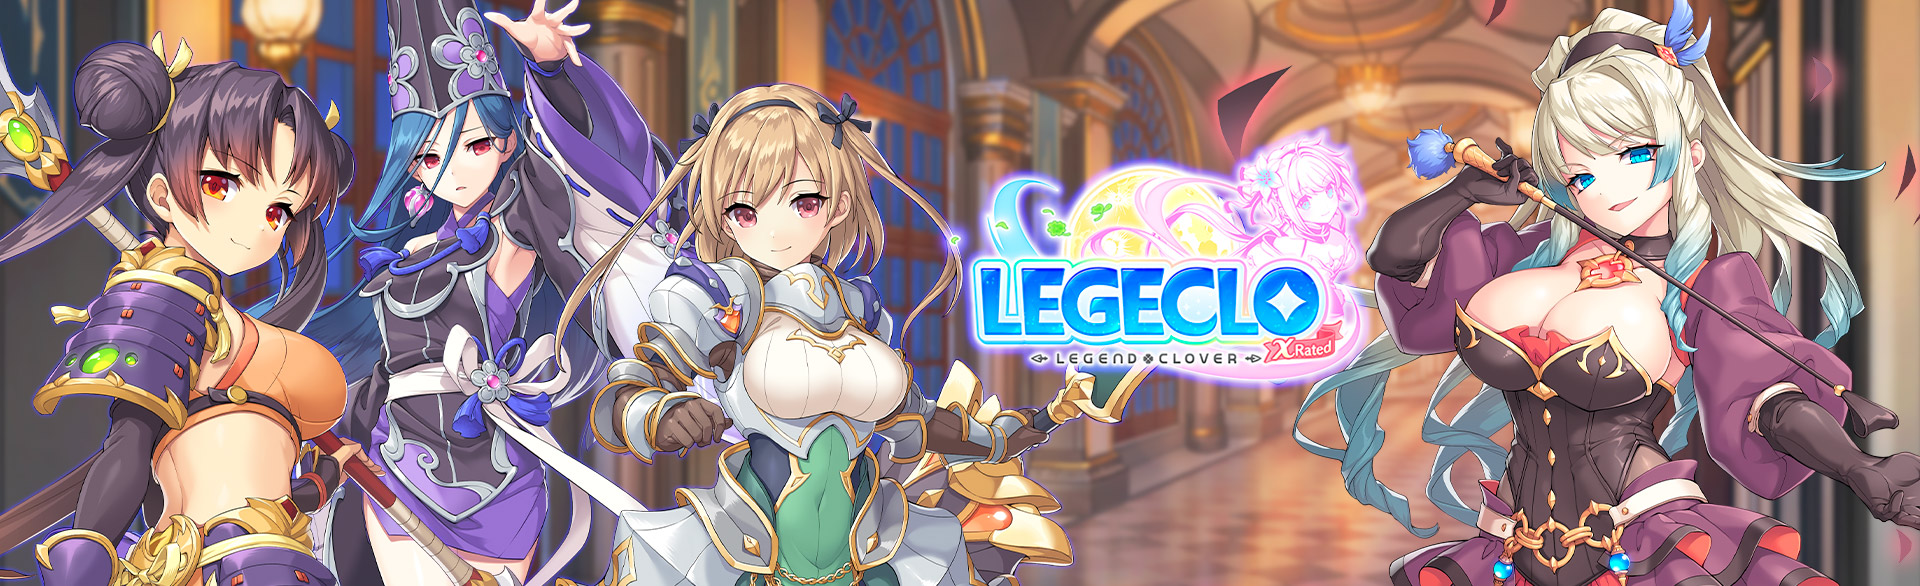 Legeclo: legend clover x rated